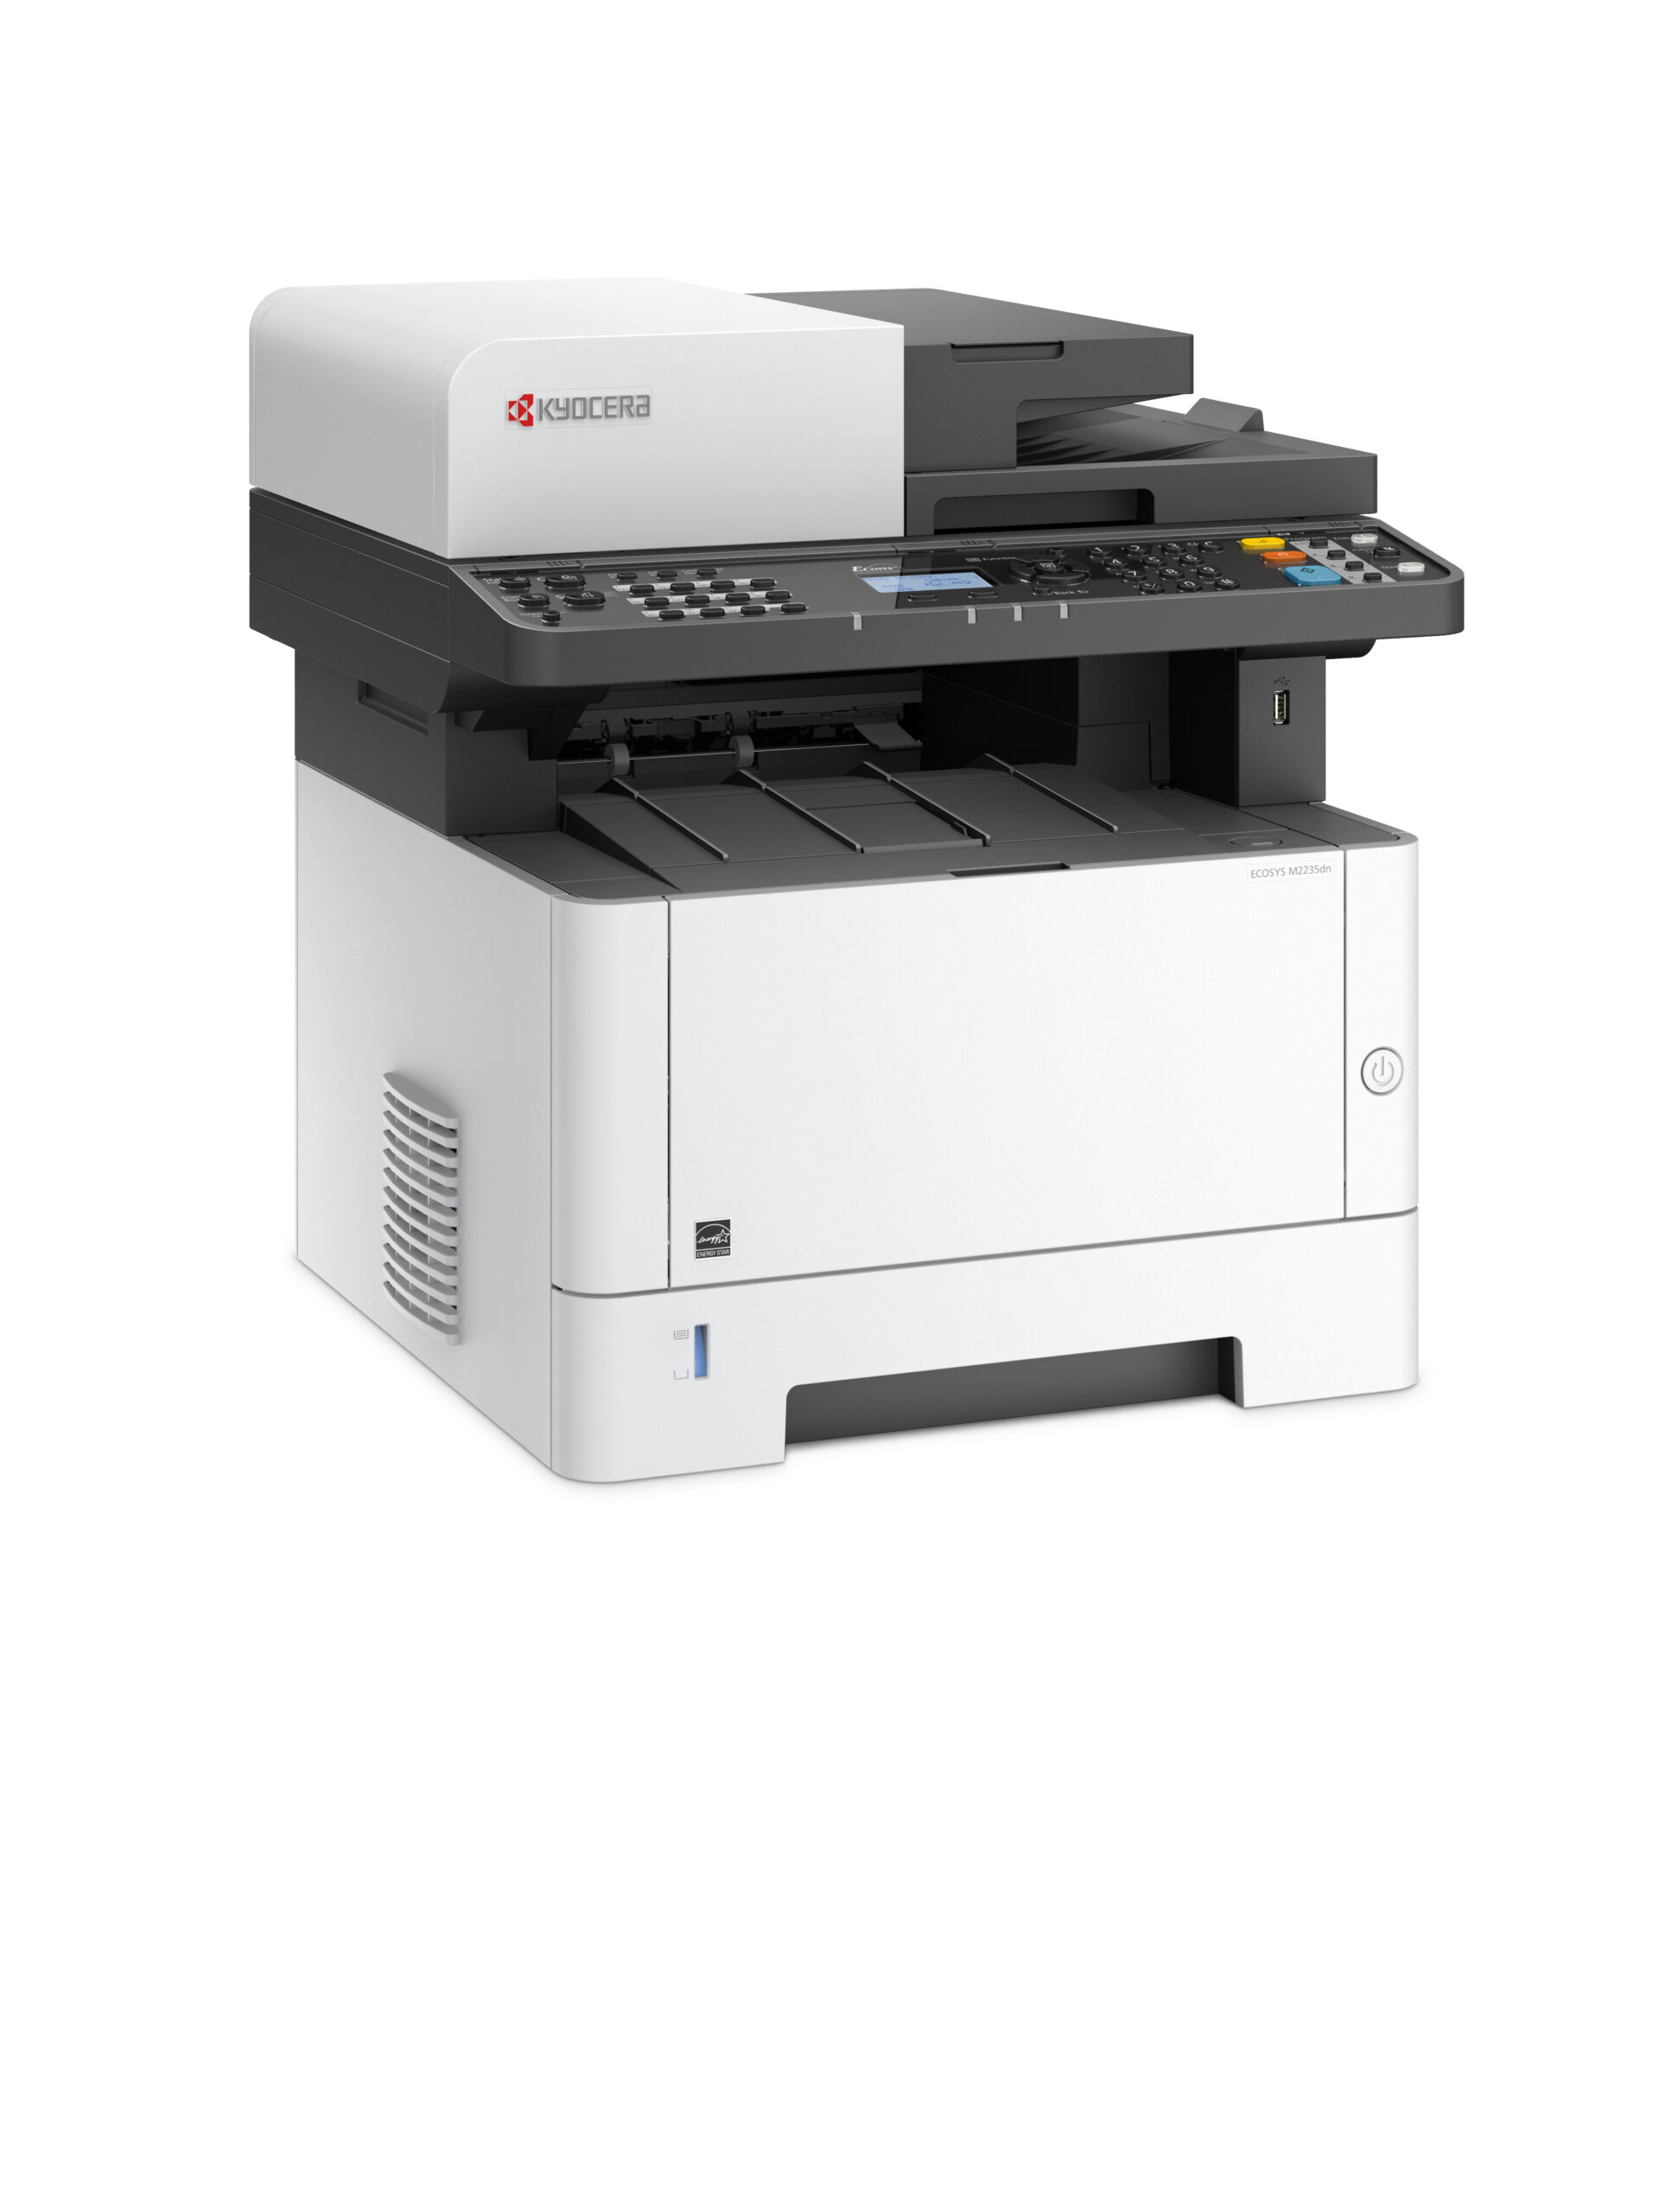 Лазерный копир-принтер-сканер Kyocera M2235dn (А4, 35 ppm, 1200dpi, 512Mb, USB, Network, автоподатчи